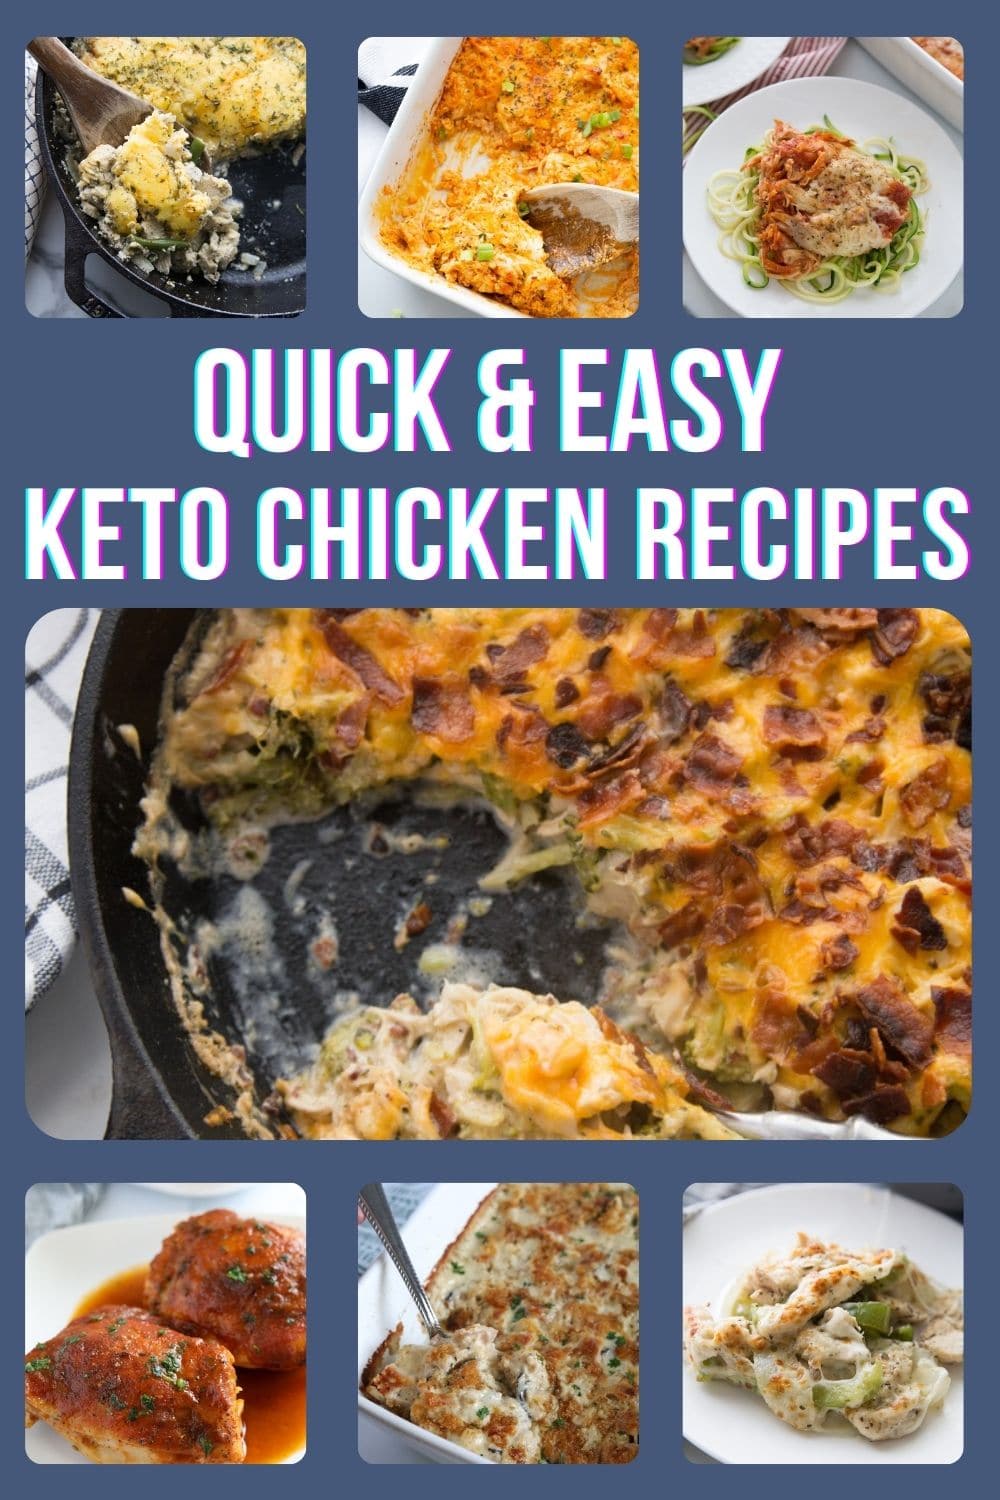 keto chicken recipes collage image